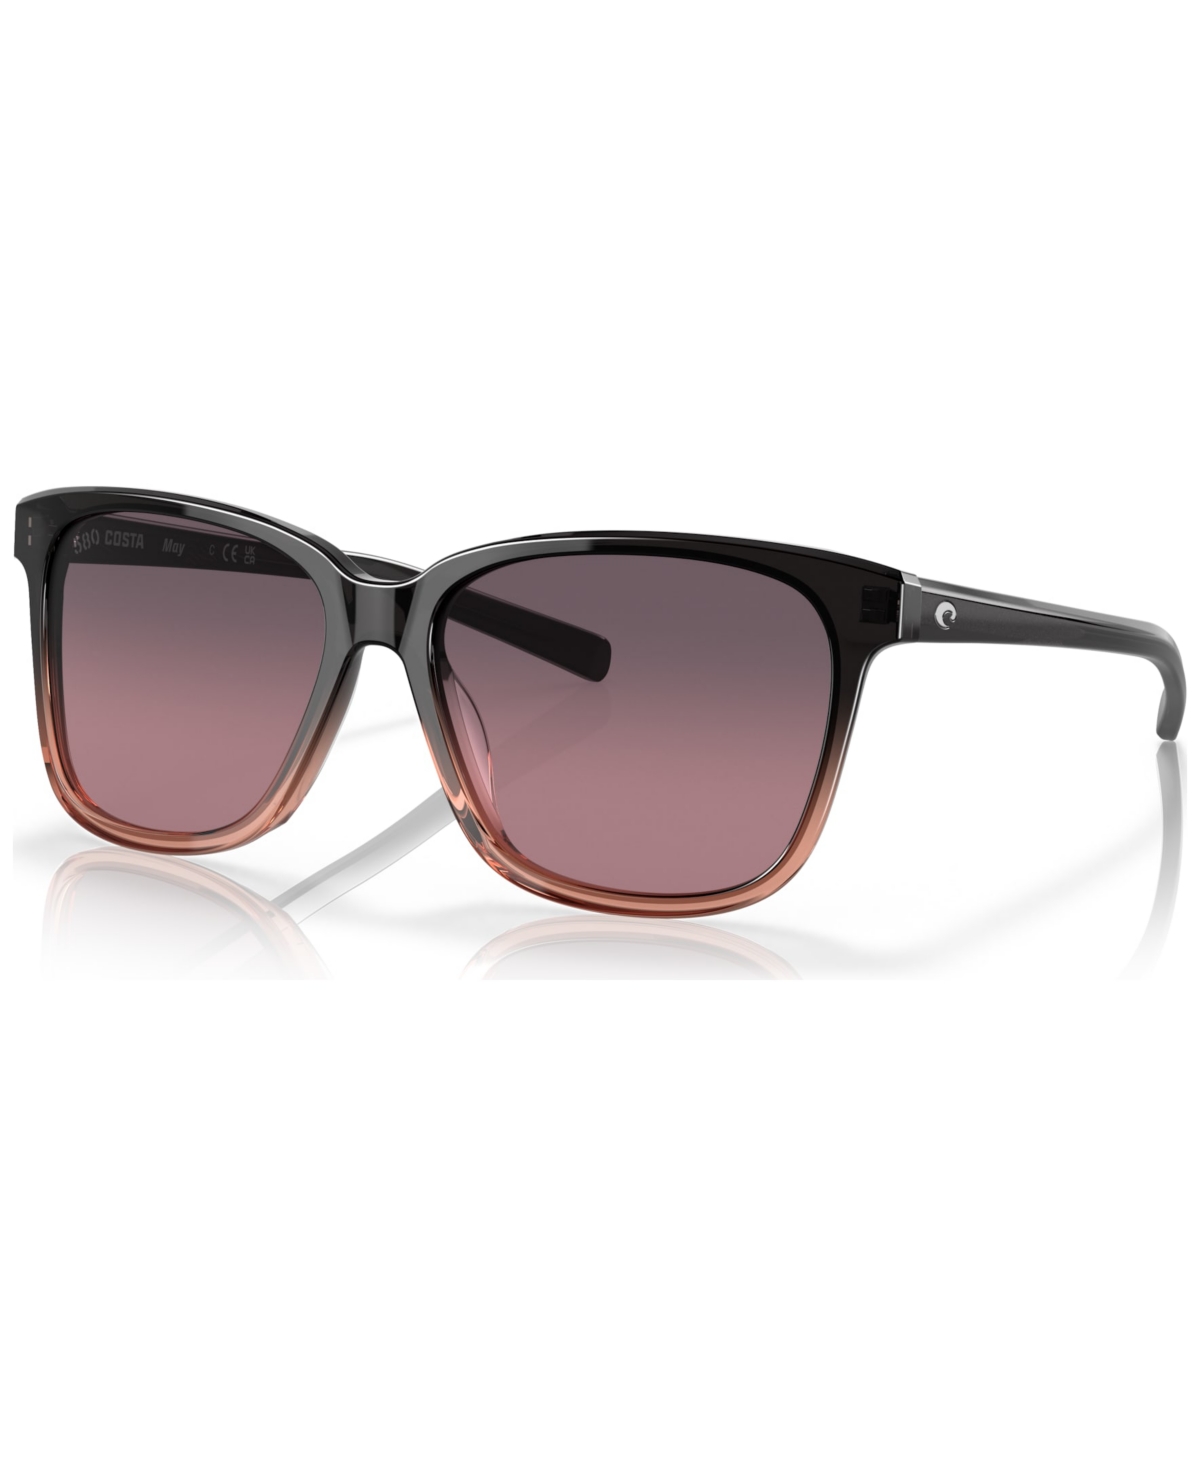 Women's Polarized Sunglasses, May - Pink Sand